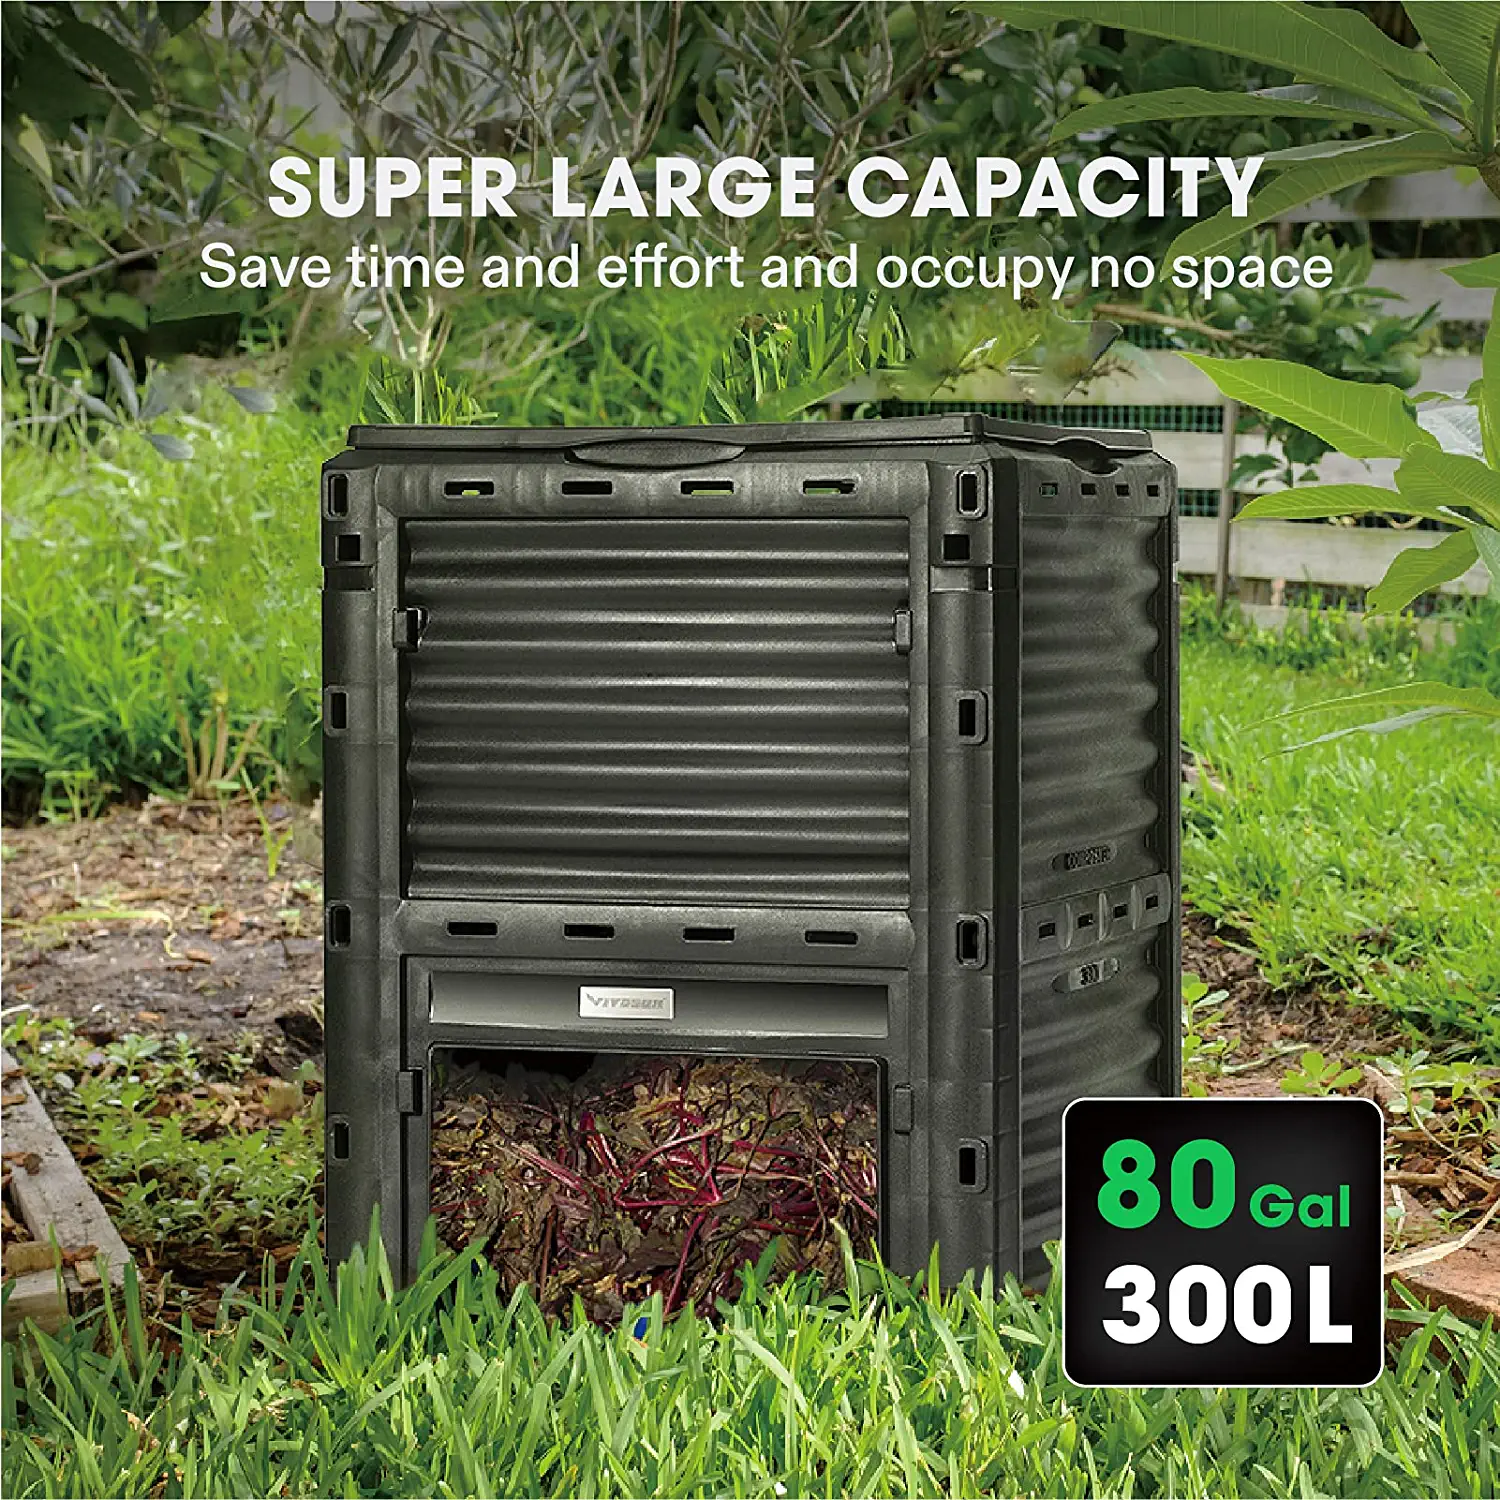 VIVOSUN Compost Bin 80Gallon (300L), Outdoor Composter W/ Large Capacity & Easy Assembling, Compost Barrel for Fast Creation of Fertile Soil